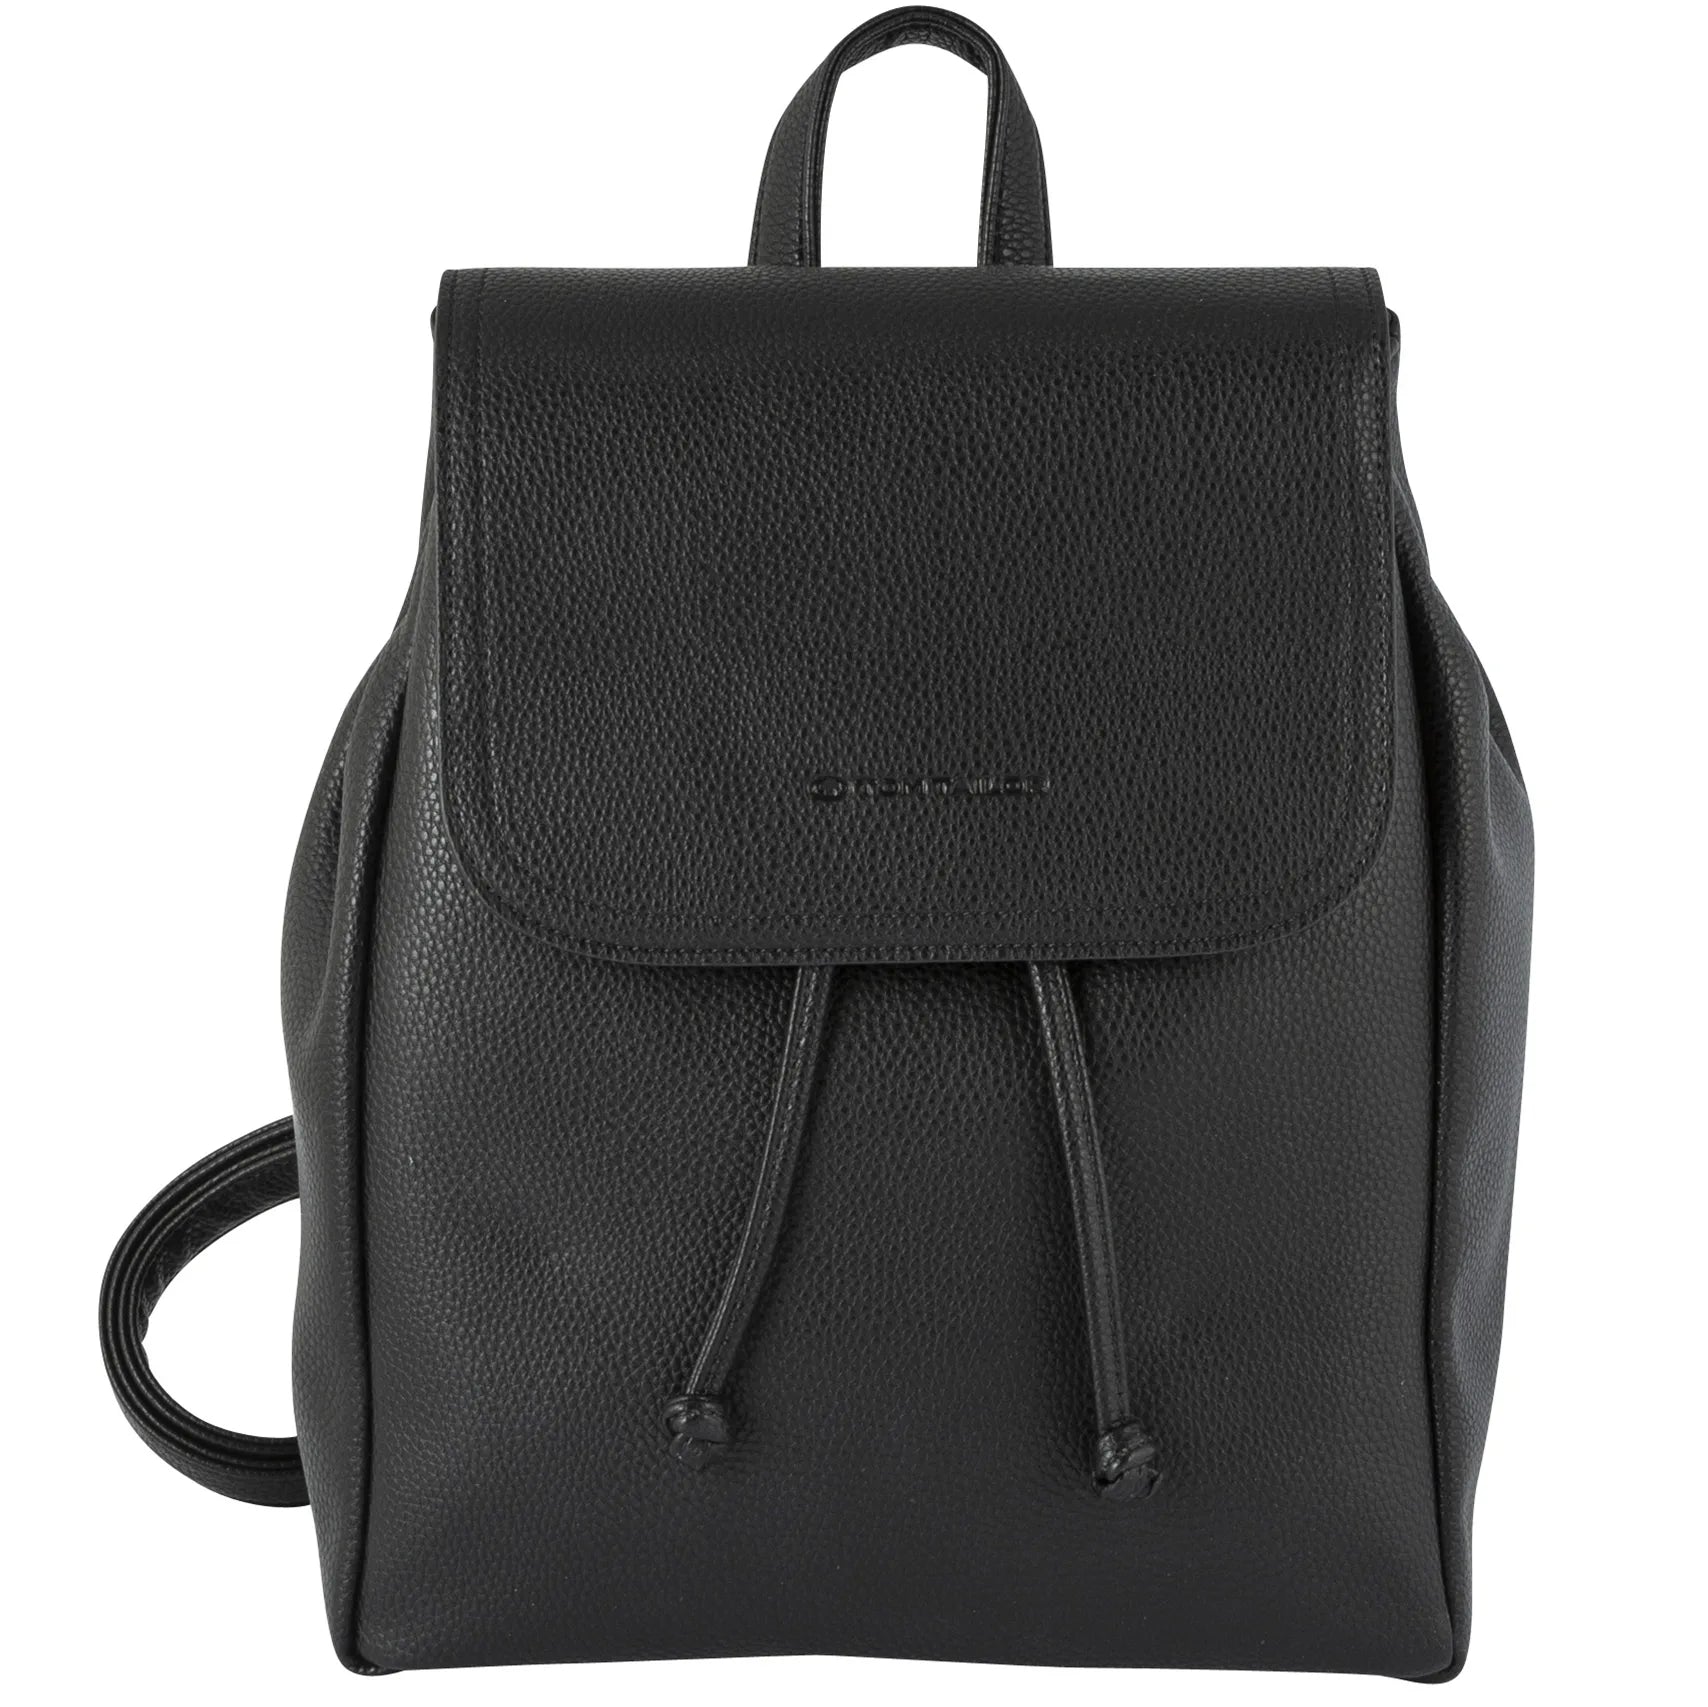 Tom Tailor Bags Tinna Backpack 31 cm - black